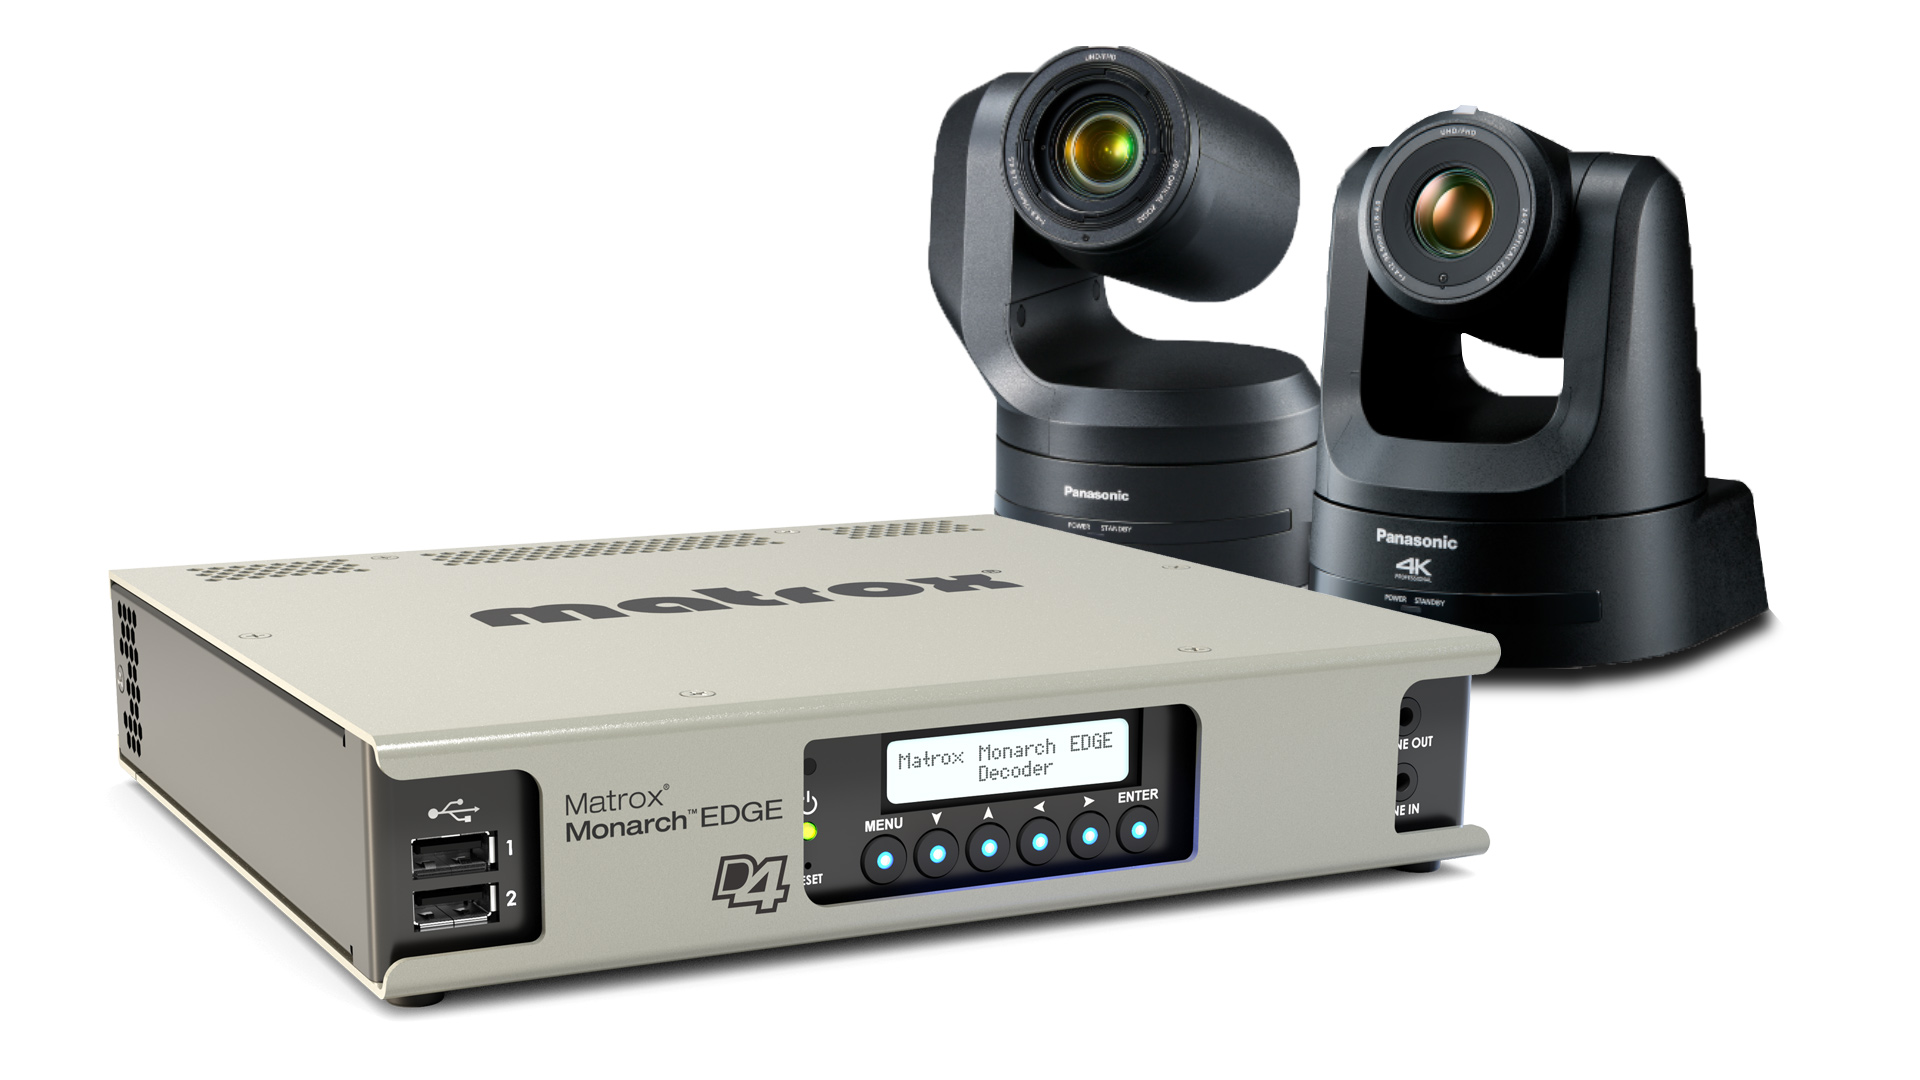 Matrox Monarch Edge and Panasonic 4k Cameras